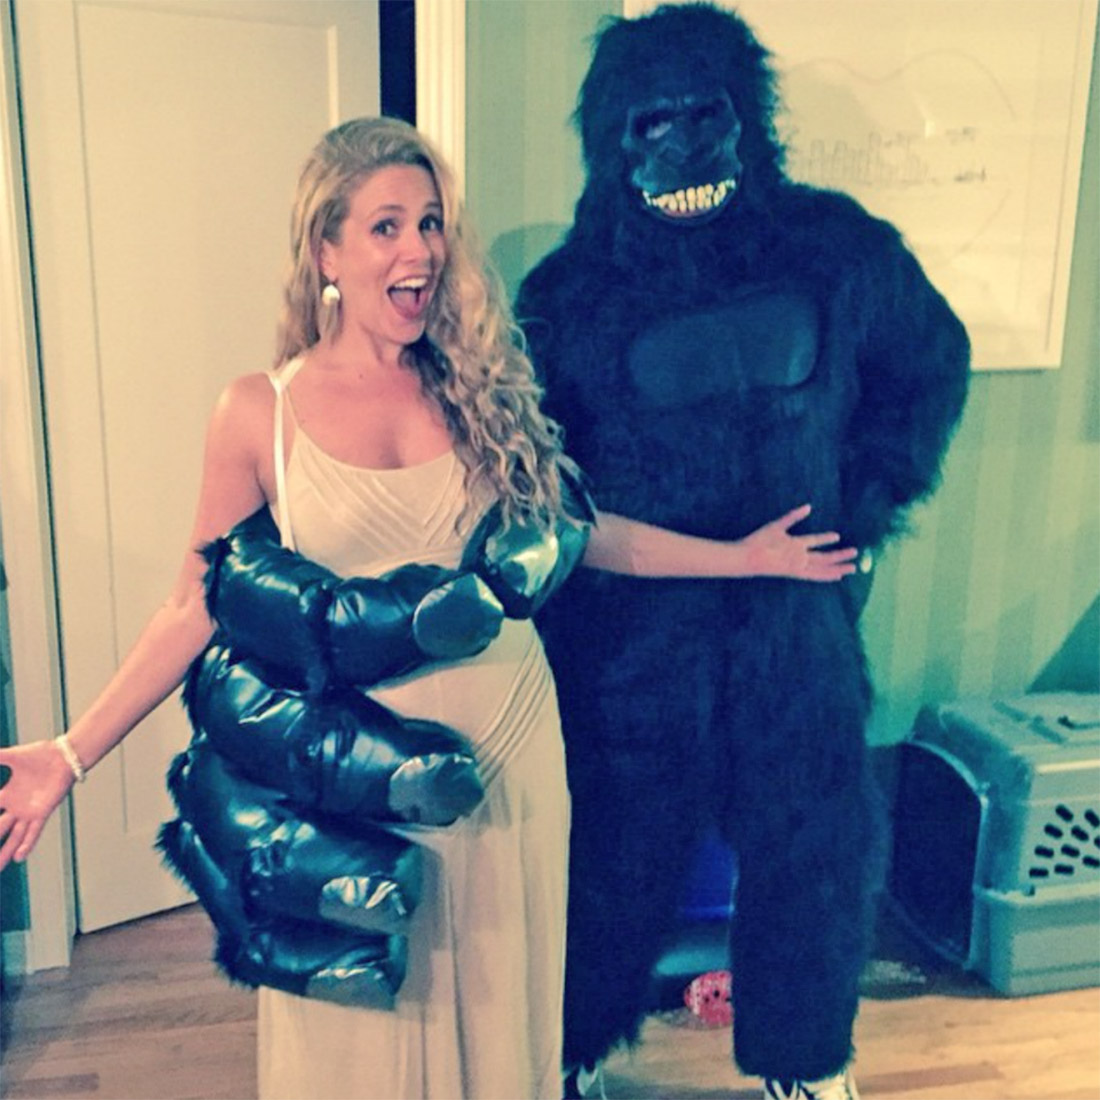 Giant King Kong Hand Costume - Grabbing ape hand Halloween Costume